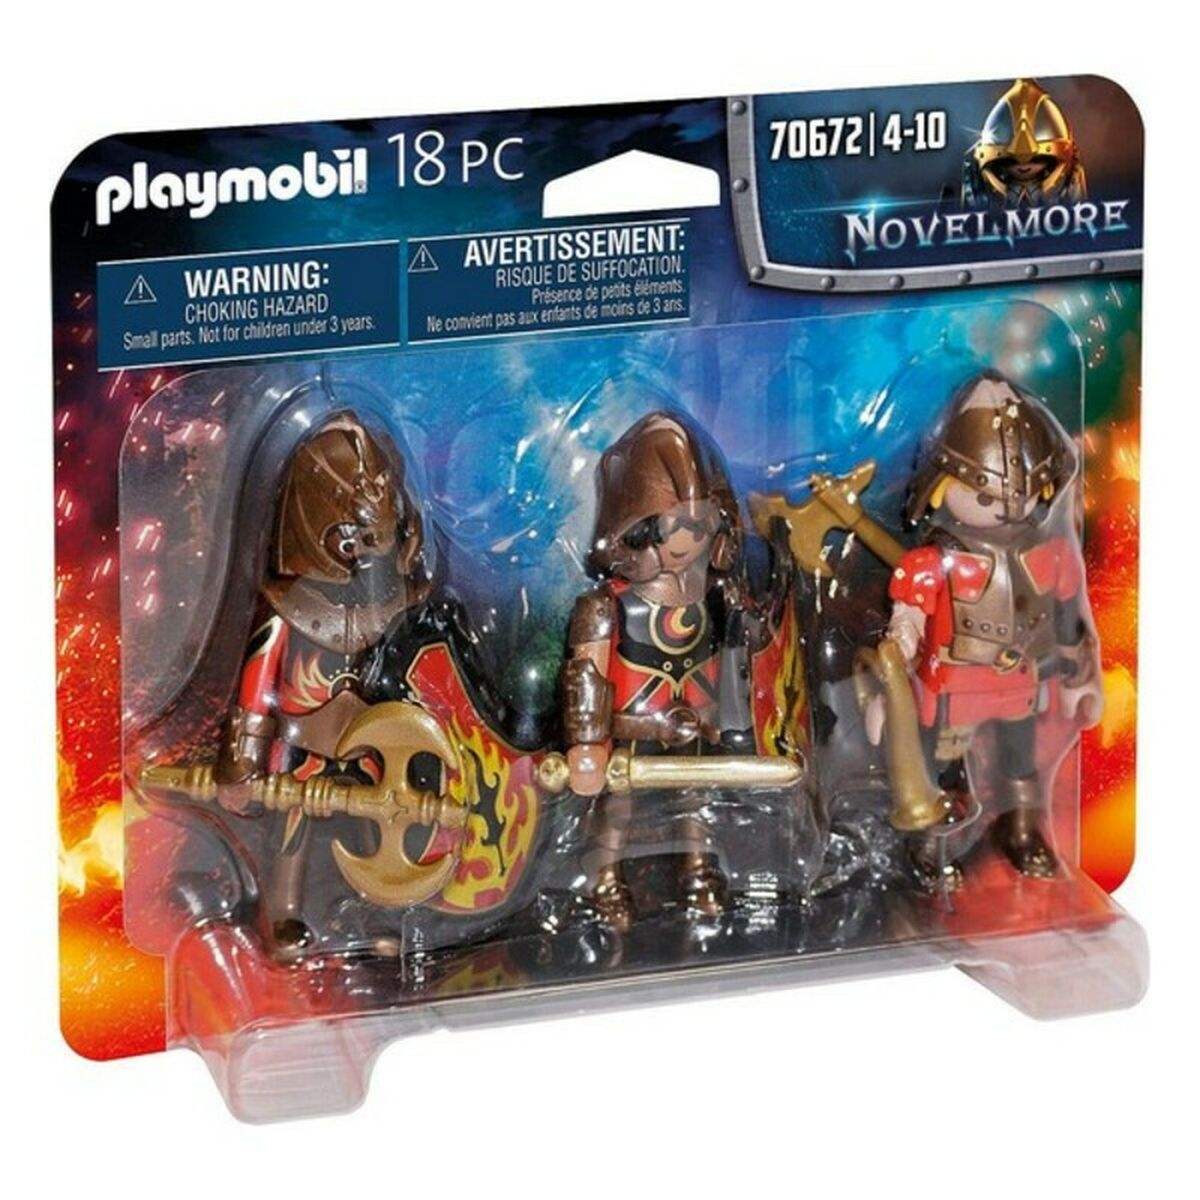 Ensemble de Figurines Novelmore Fire Knigths Playmobil 70672 (18 pcs) - Playmobil - Jardin D'Eyden - jardindeyden.fr